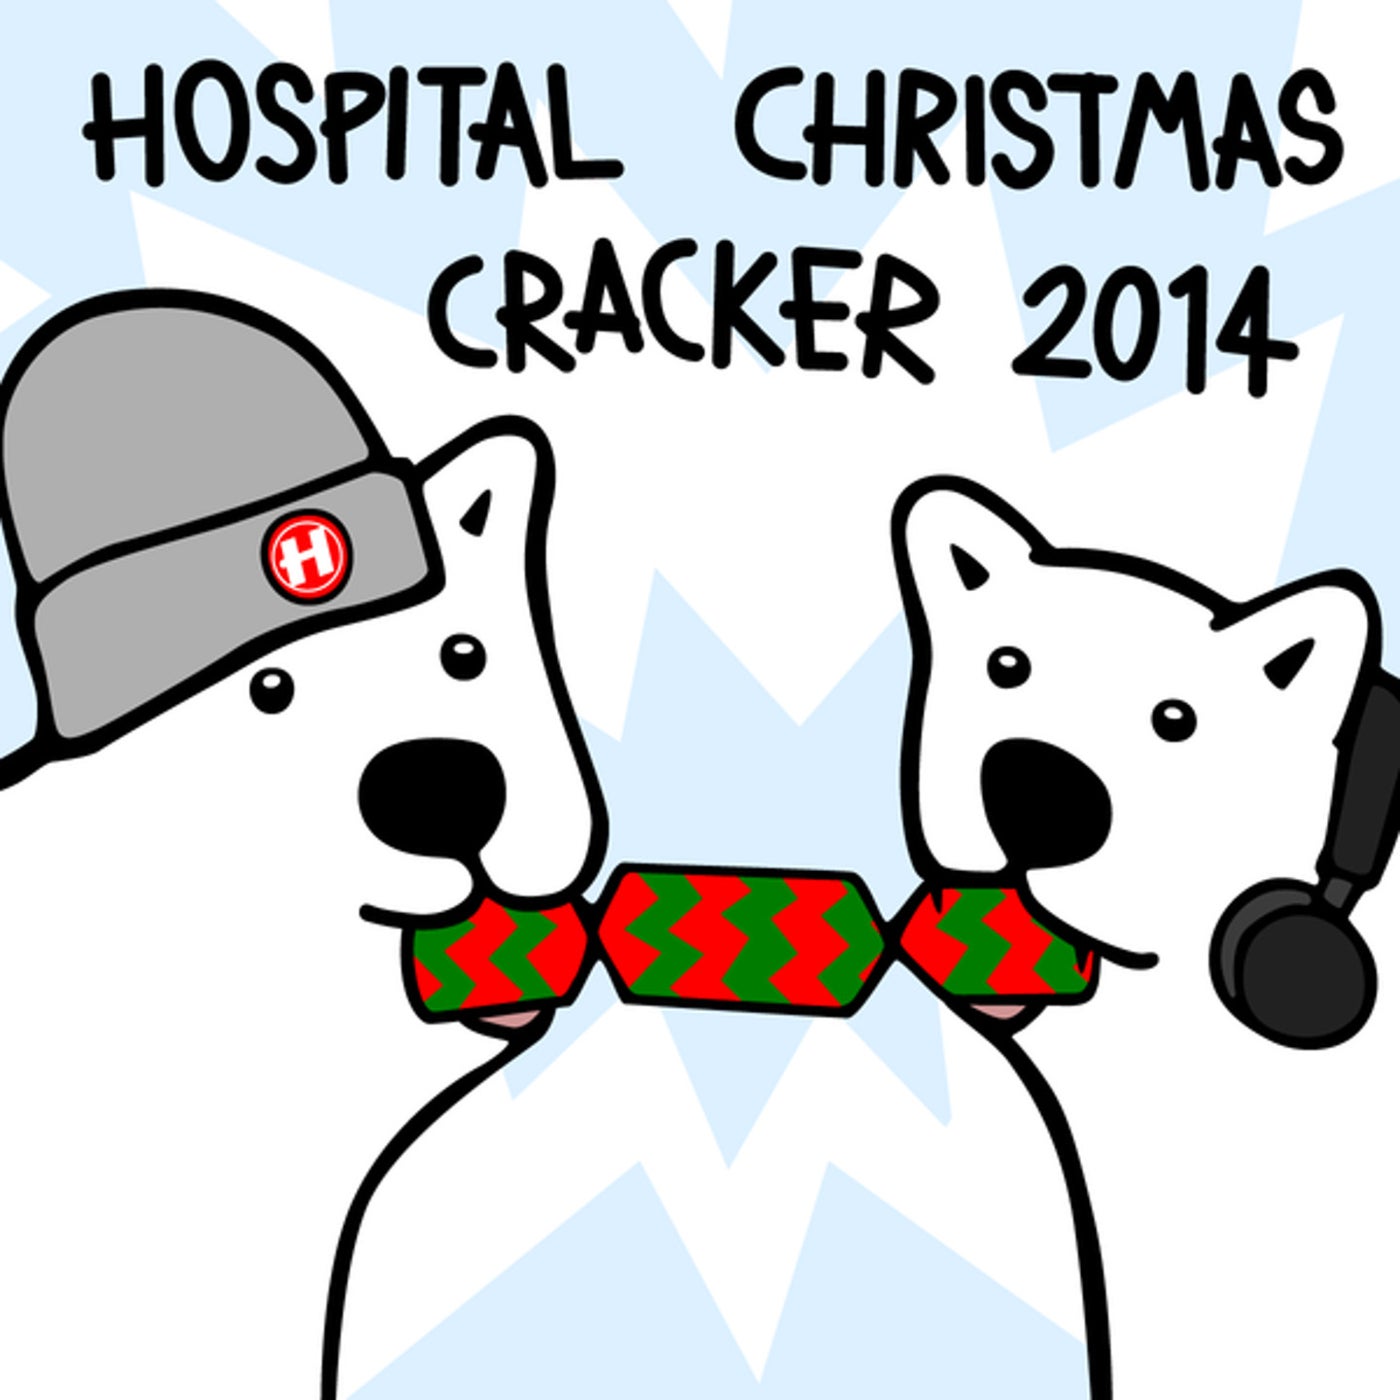 Hospital Christmas Cracker 2014